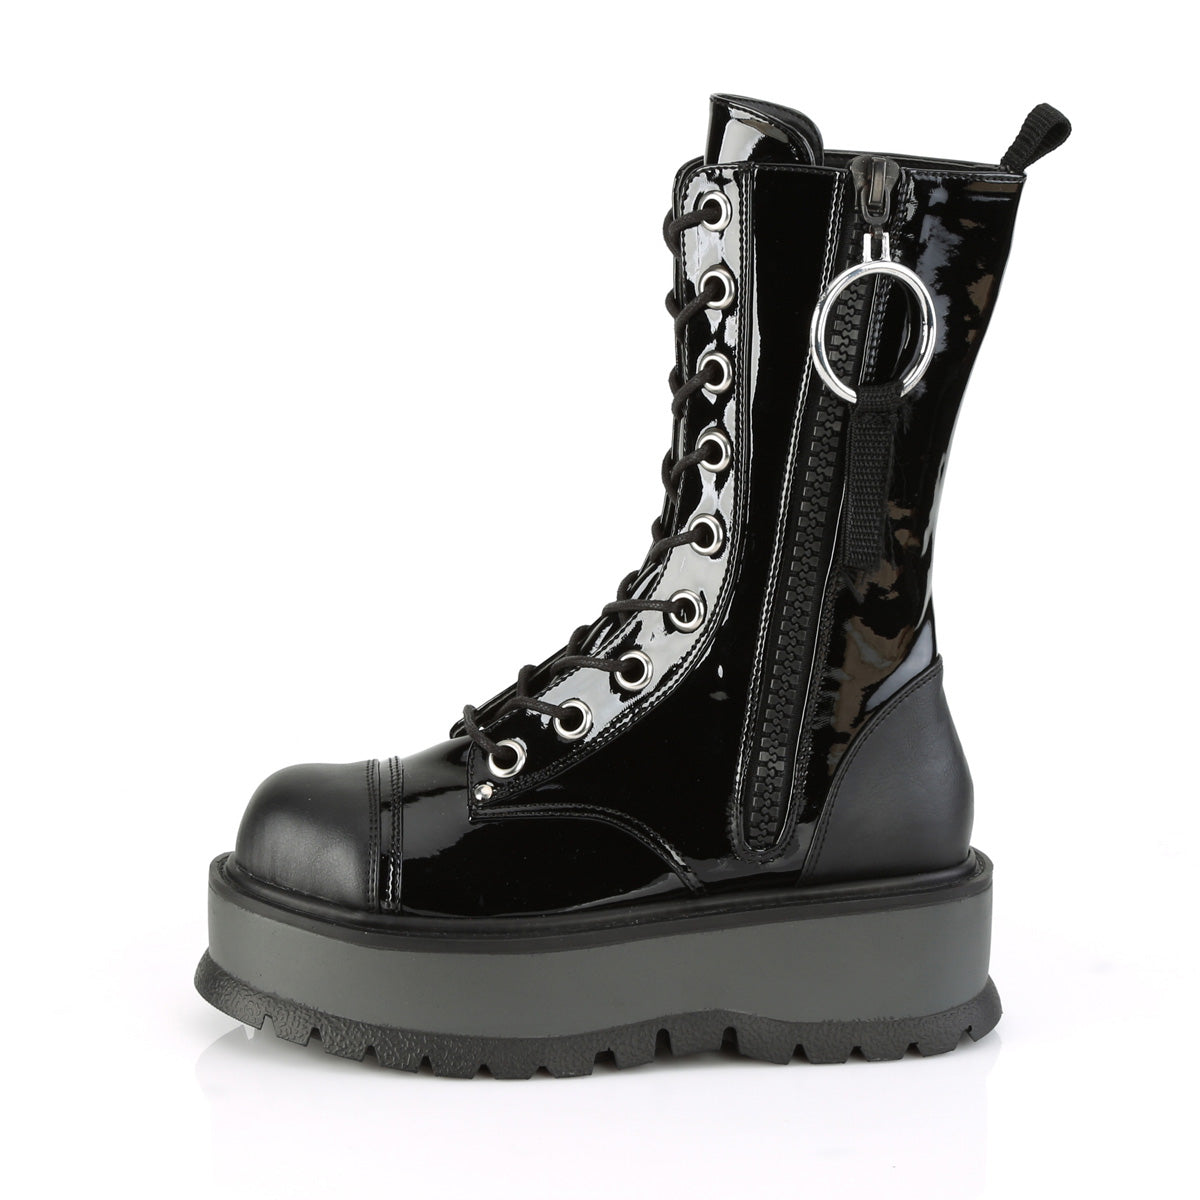 SLACKER-220 Black Patent-Vegan Leather Mid-Calf Boot Demonia